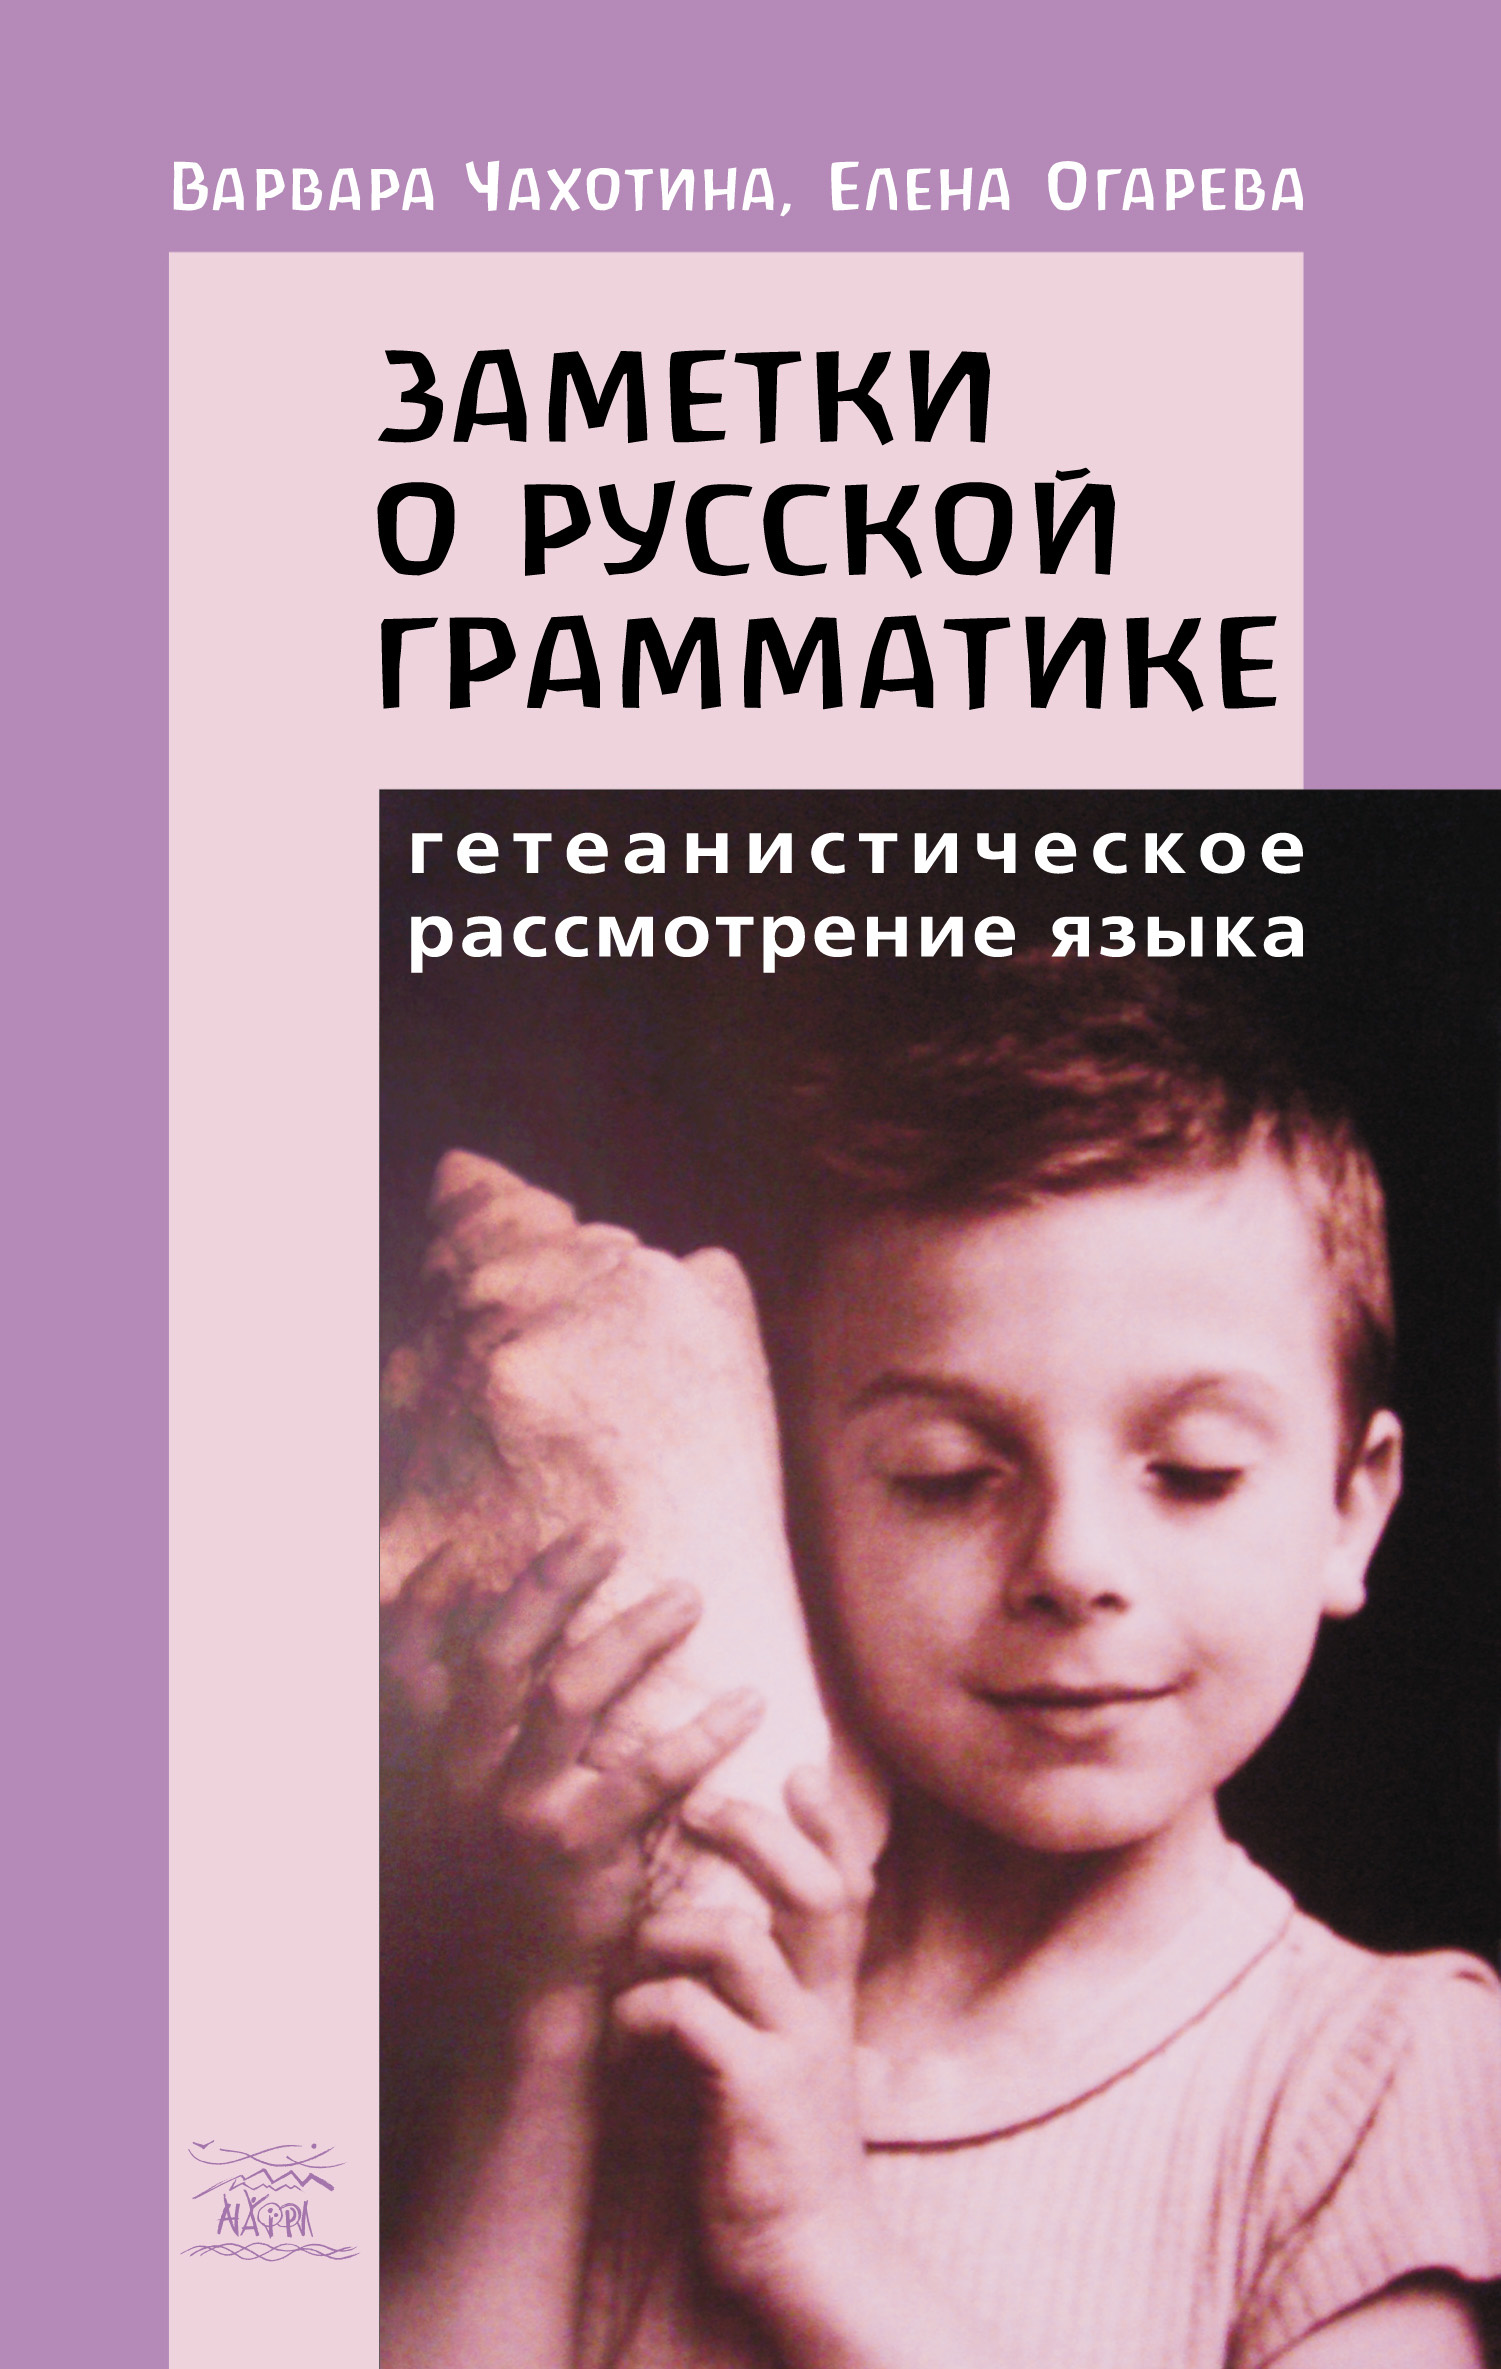 Учебная литература. Автор — Варвара Чахотіна, Олена Огарьова. 